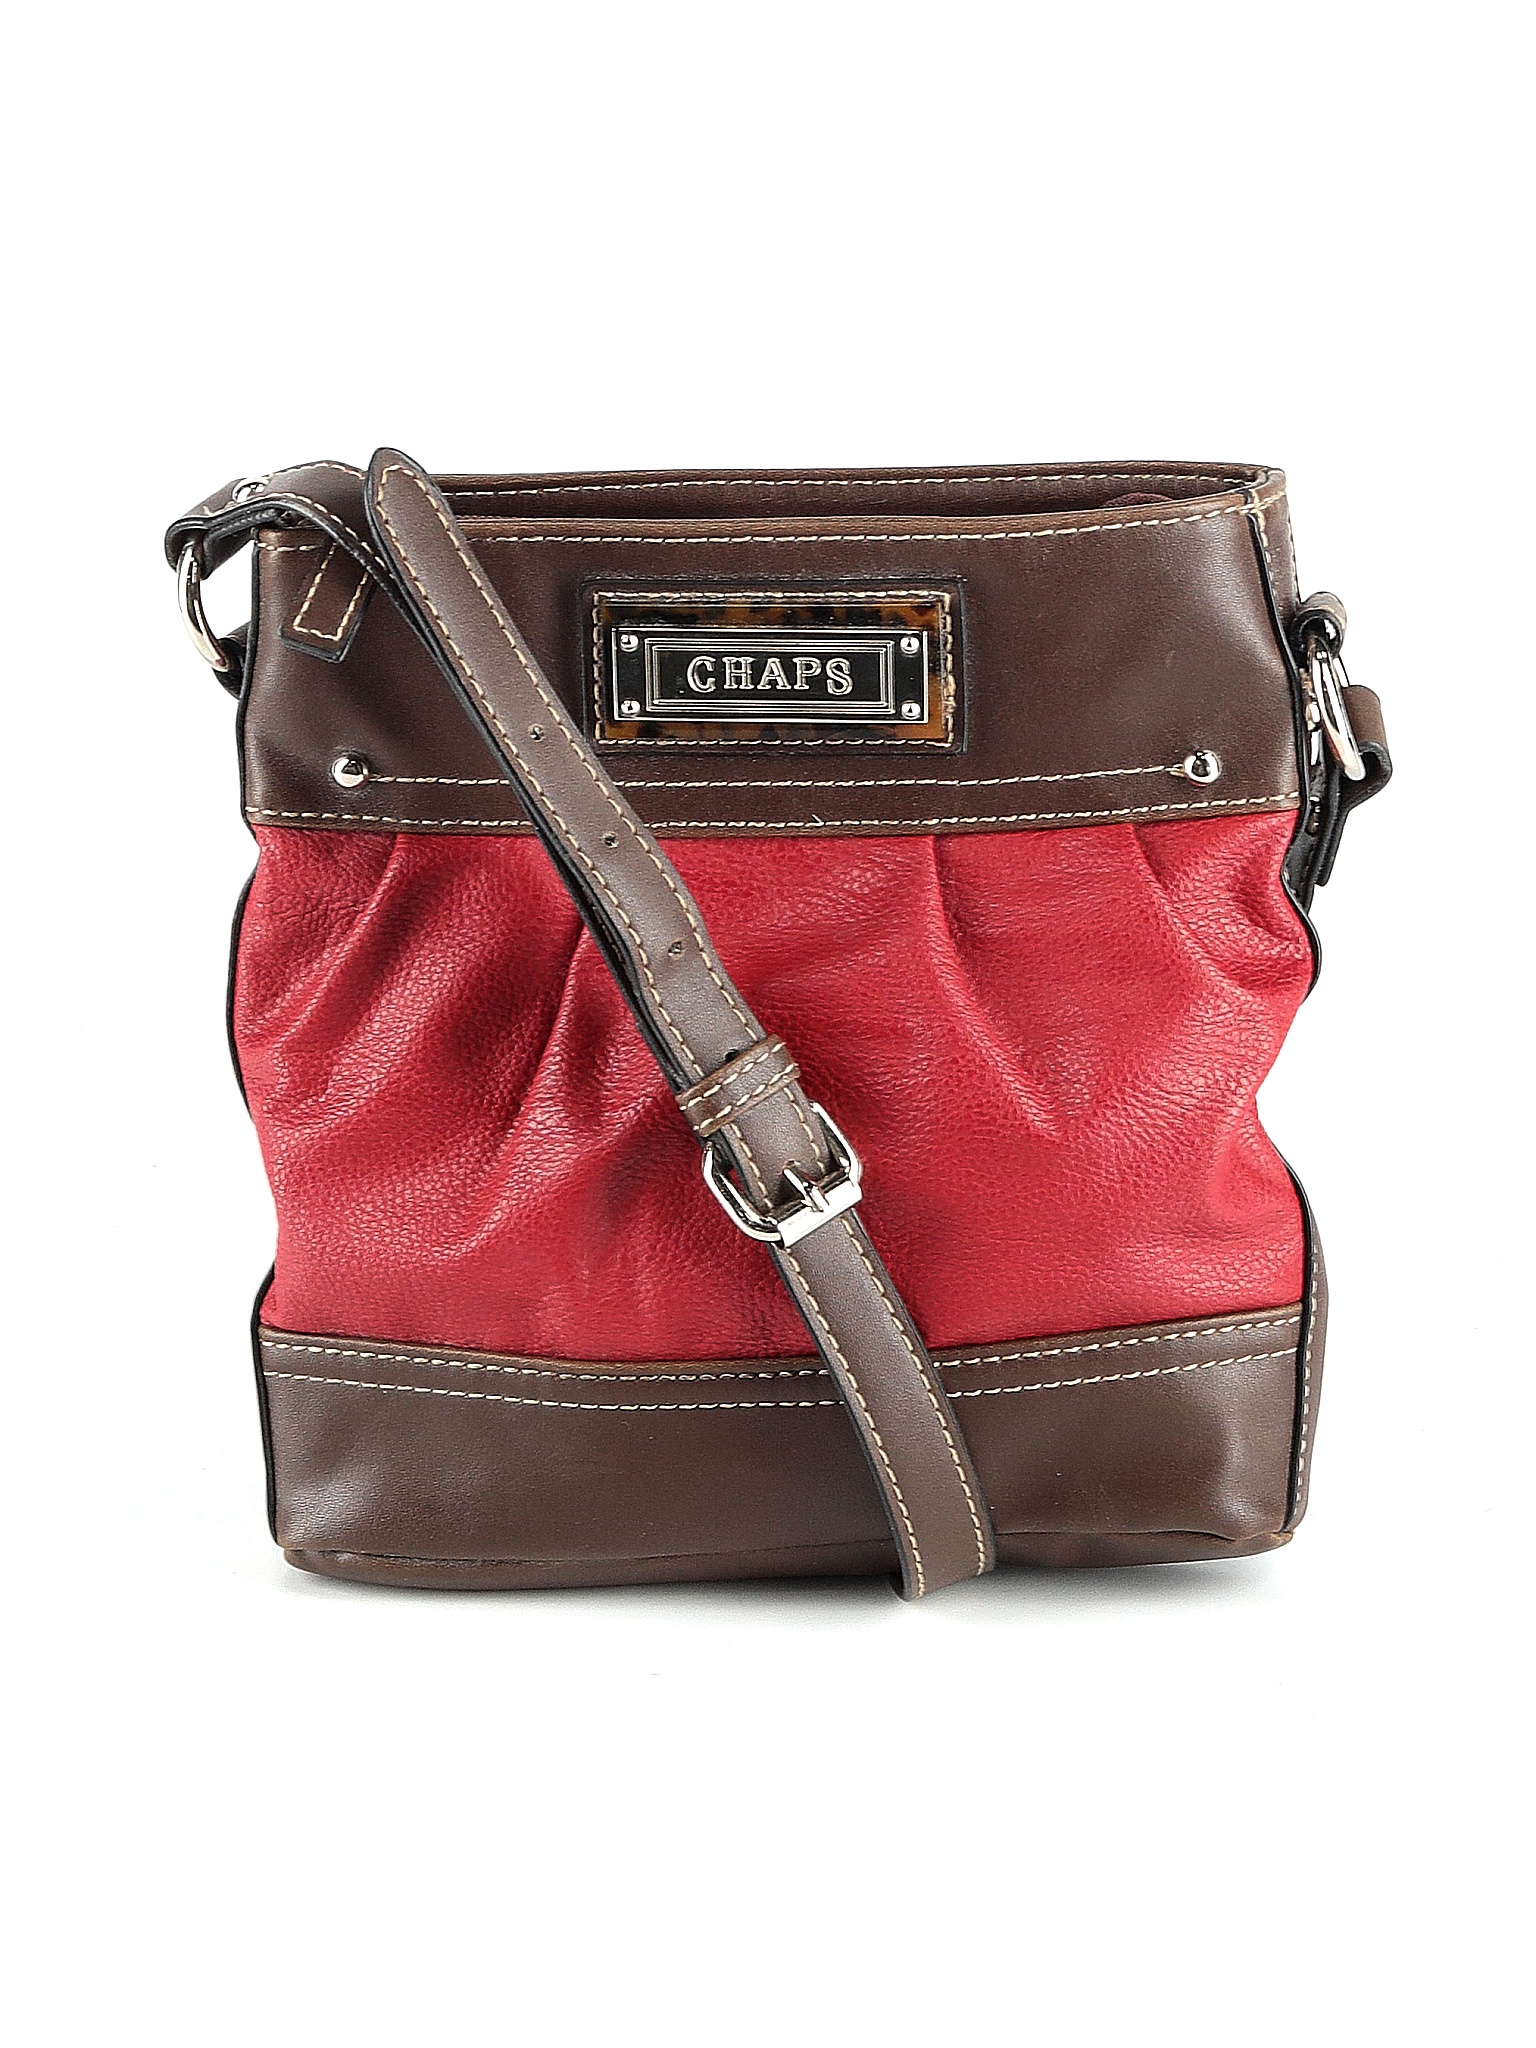 NEW Chaps Stirrup Bridle Buckle Newbury Street Red Style 50617 CP Purse Handbag